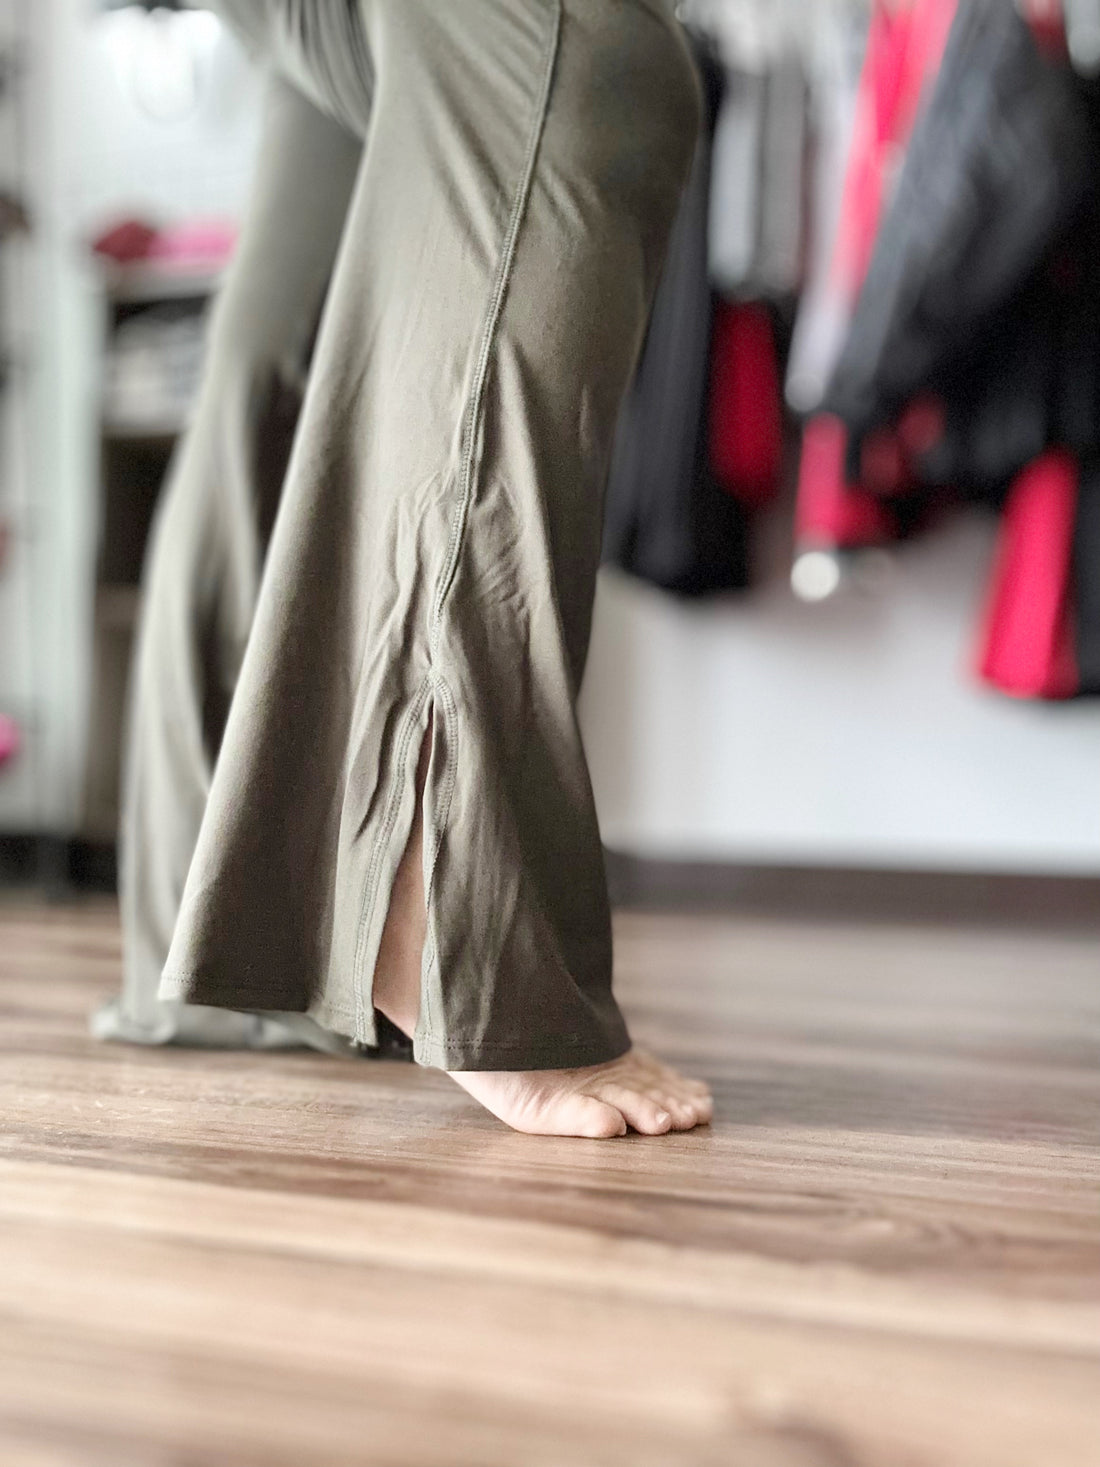 V-Waist Flare Yoga Leggings with Pockets